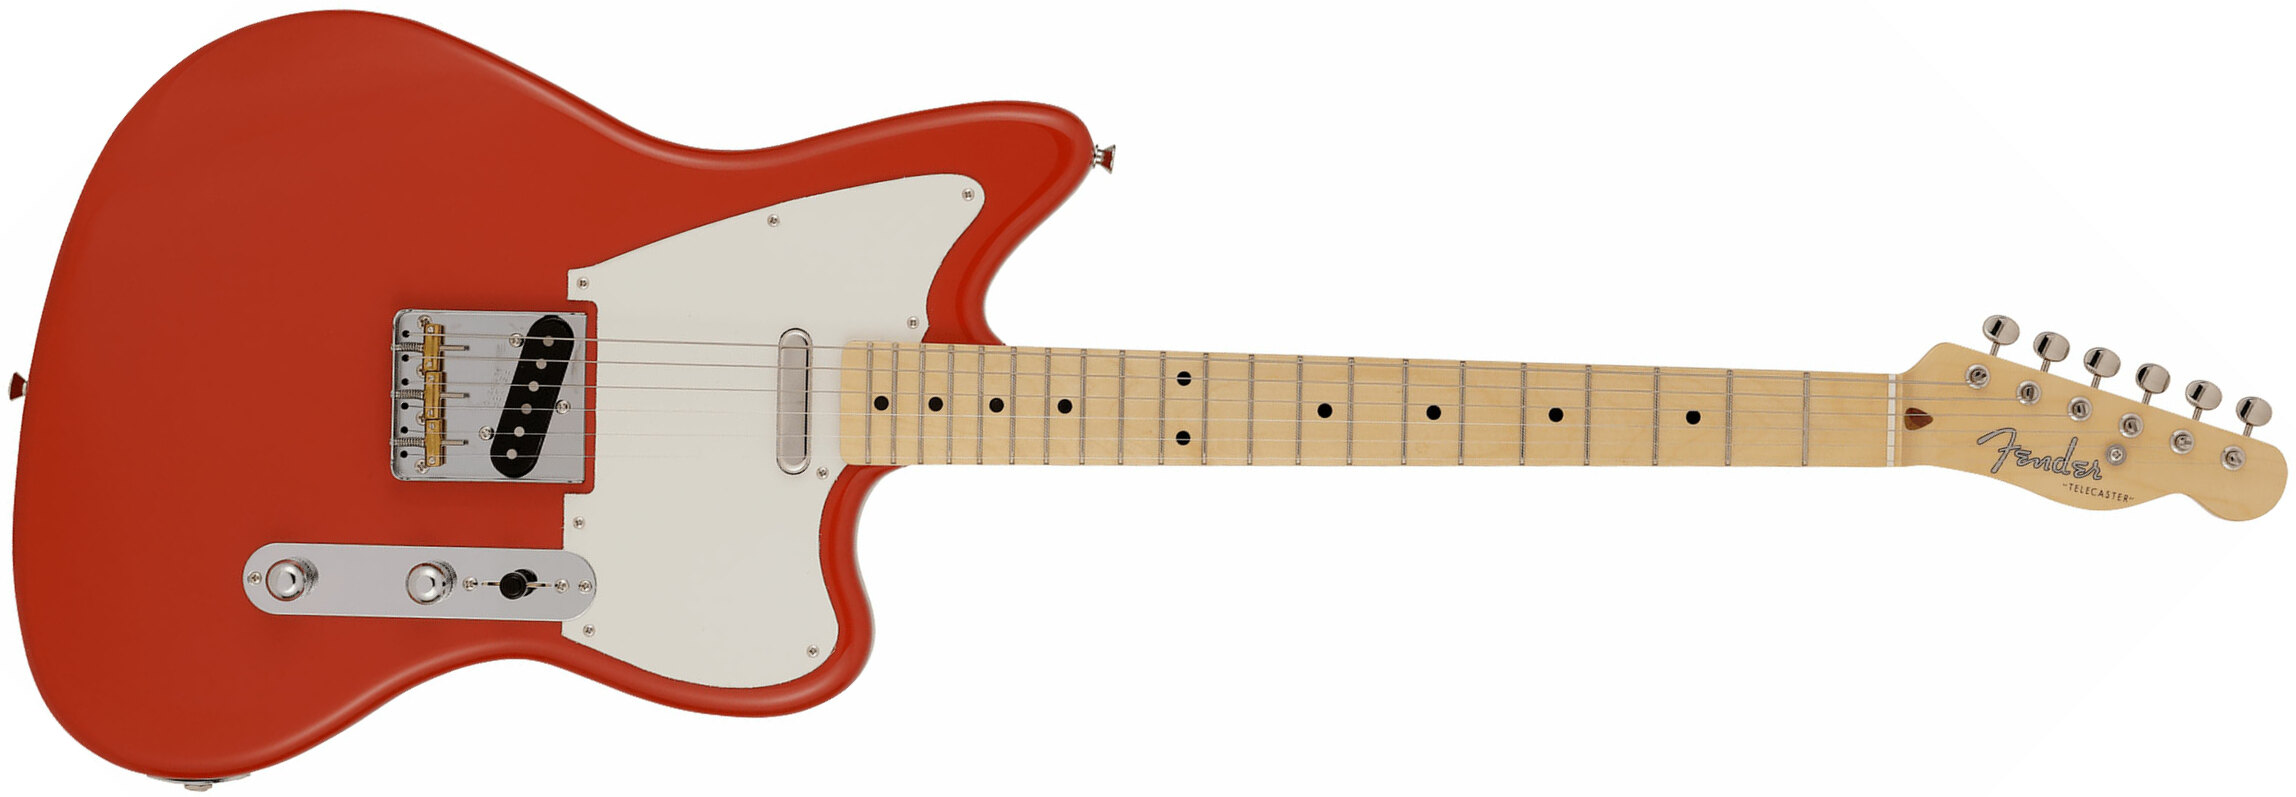 Fender Tele Offset Ltd Jap 2s Ht Mn - Fiesta Red - Retro-rock elektrische gitaar - Main picture